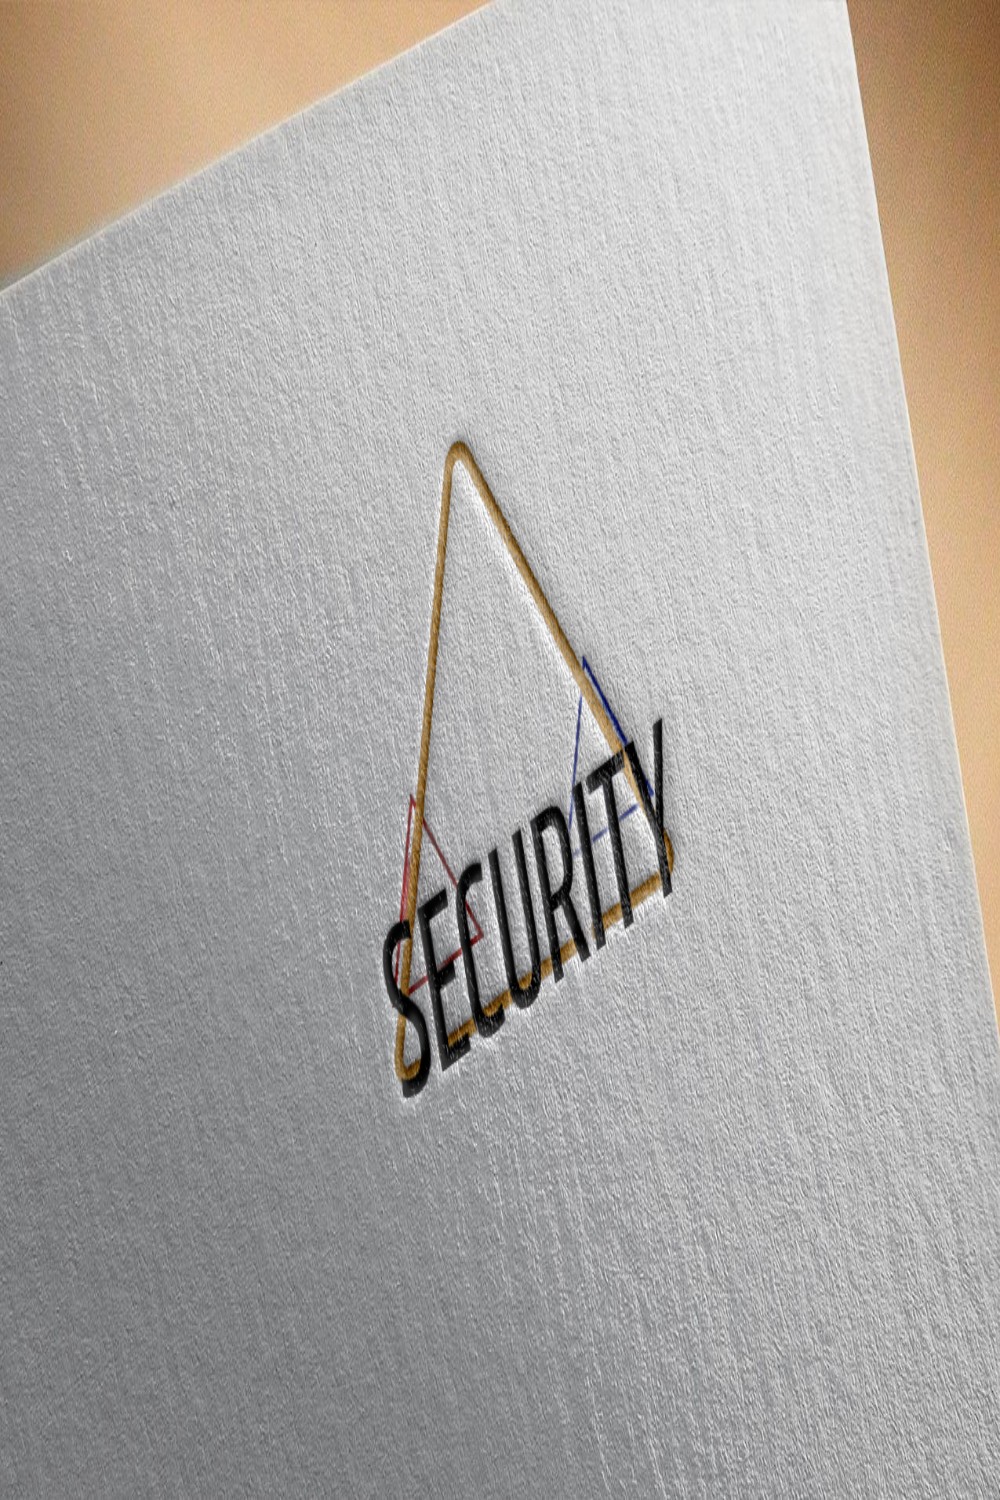 Minimalism Logo Security Design pinterest image.